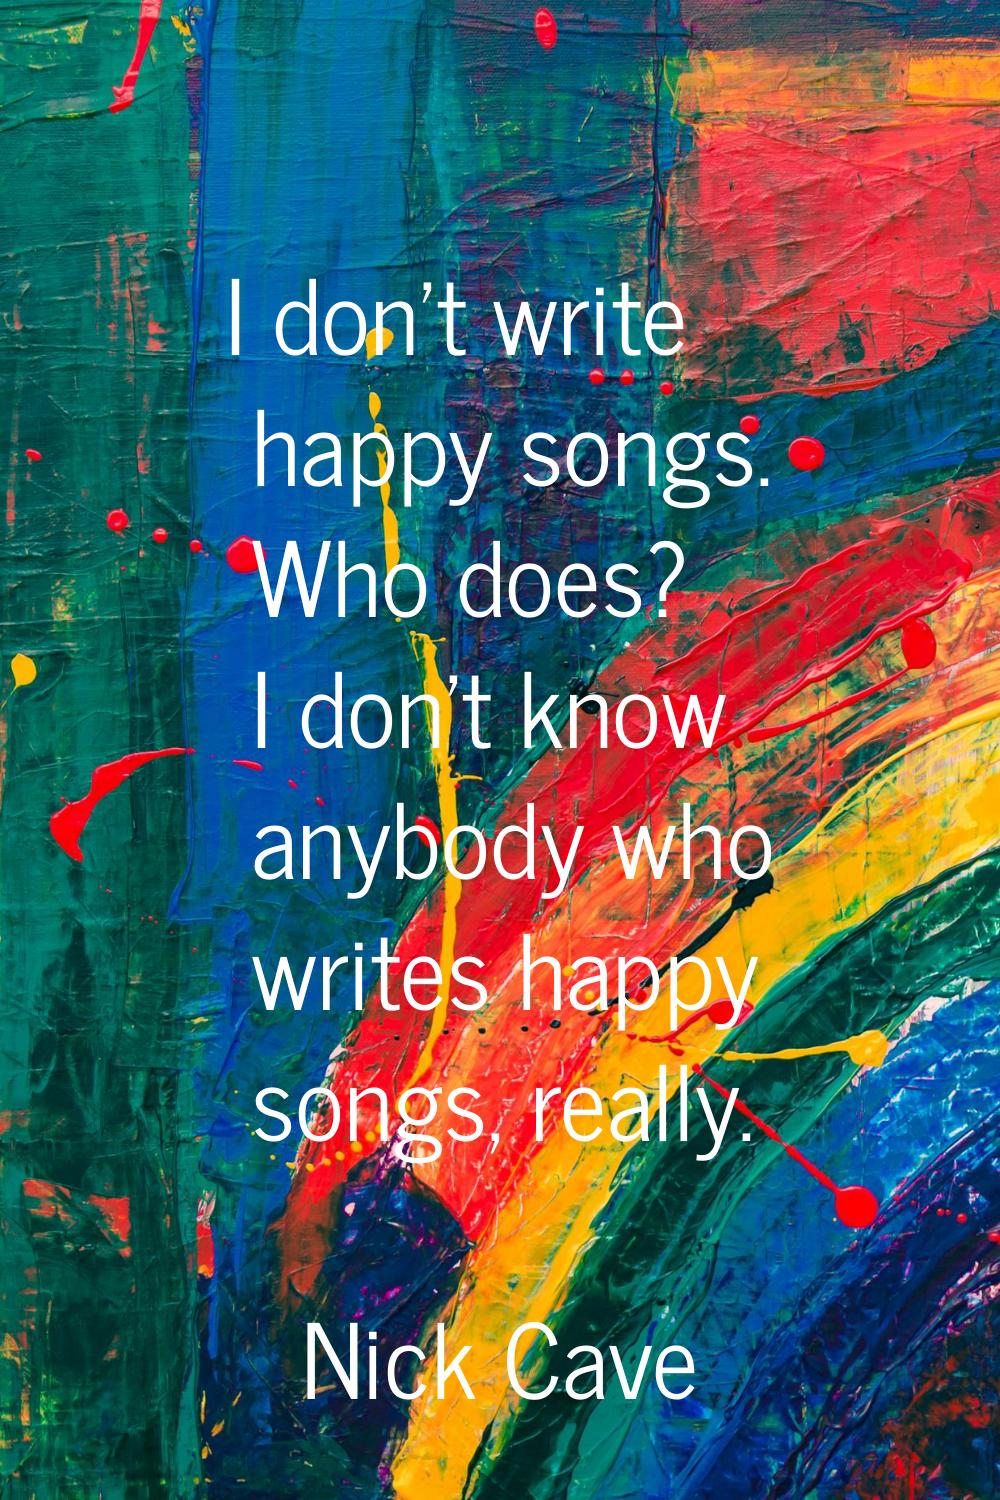 I don't write happy songs. Who does? I don't know anybody who writes happy songs, really.